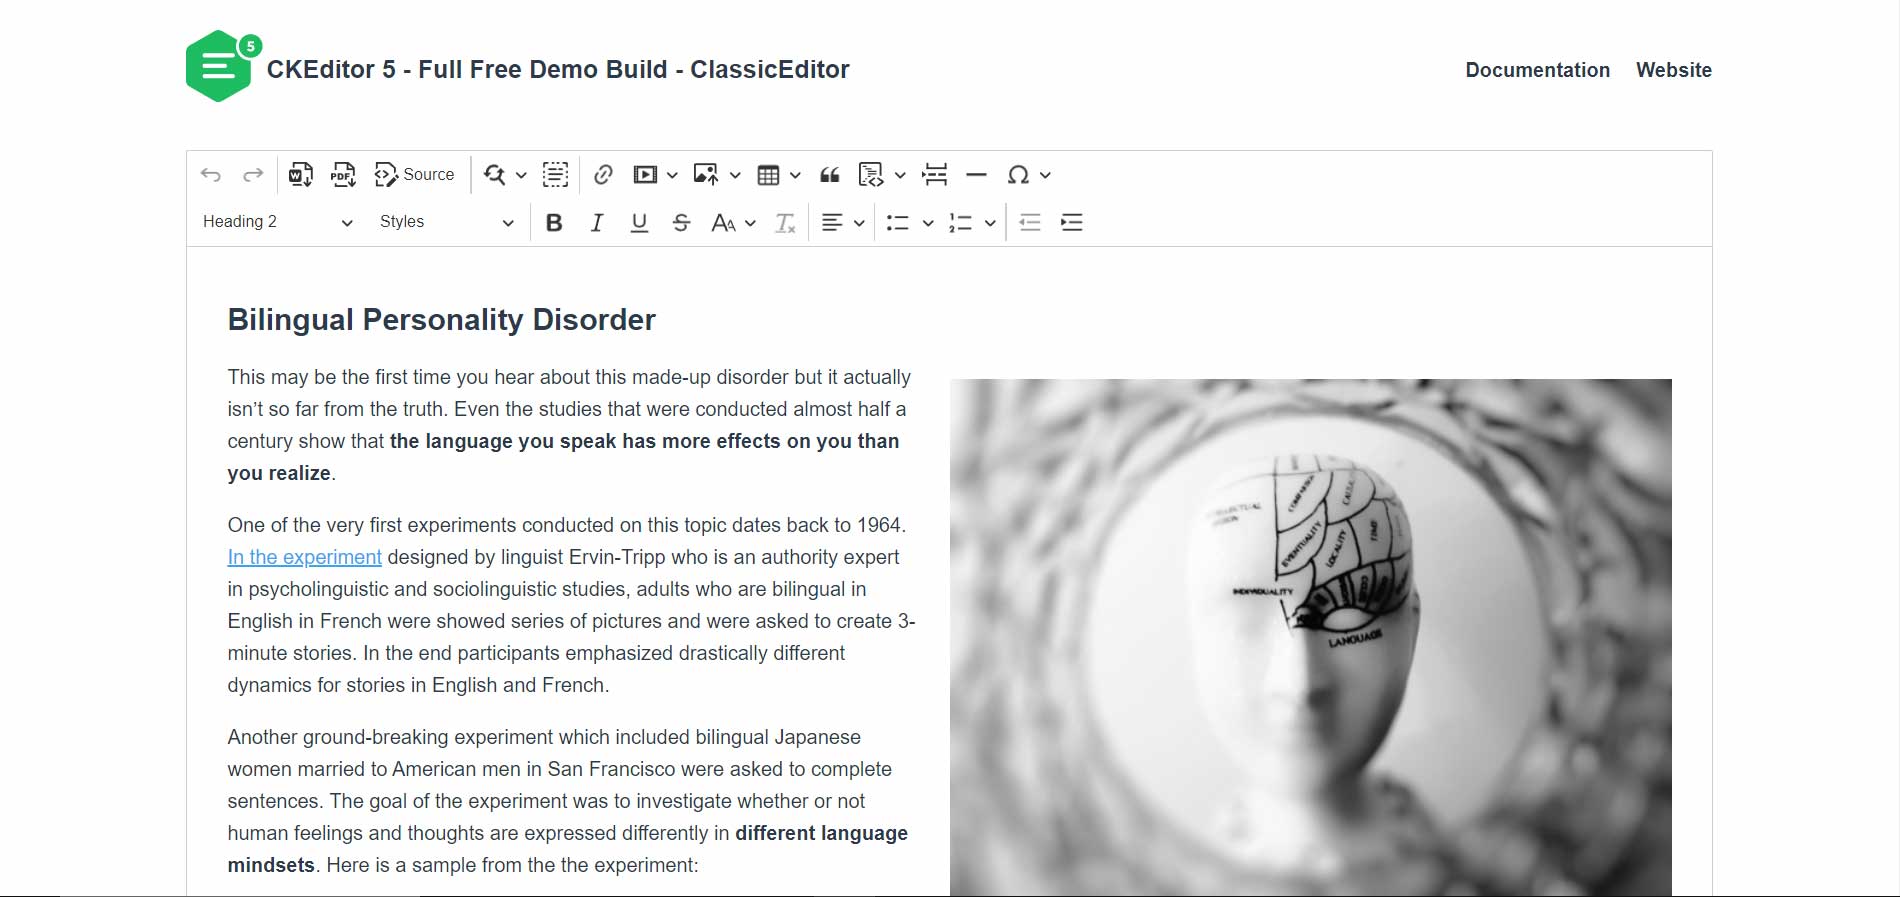 CKEditor 5 Classic Editor Full Free Build Screenshot